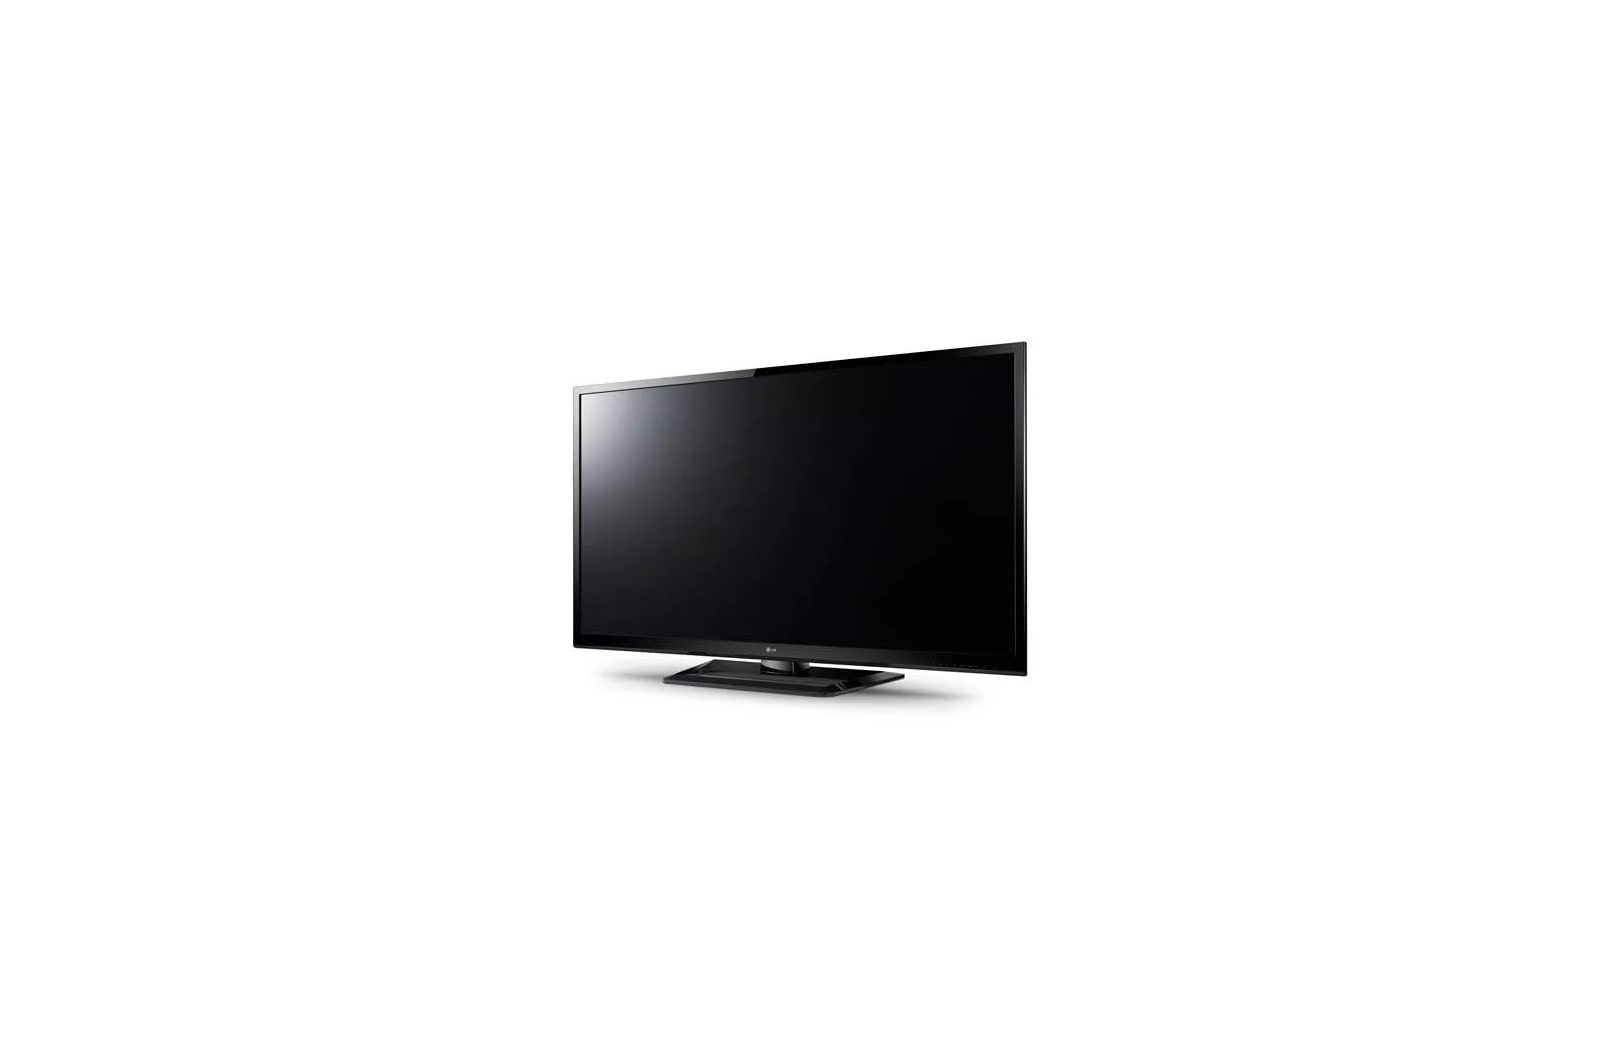 LG TV LCD LED, DLNA, HDTV 1080p, USB 2.0, 120cm (47 pouces)